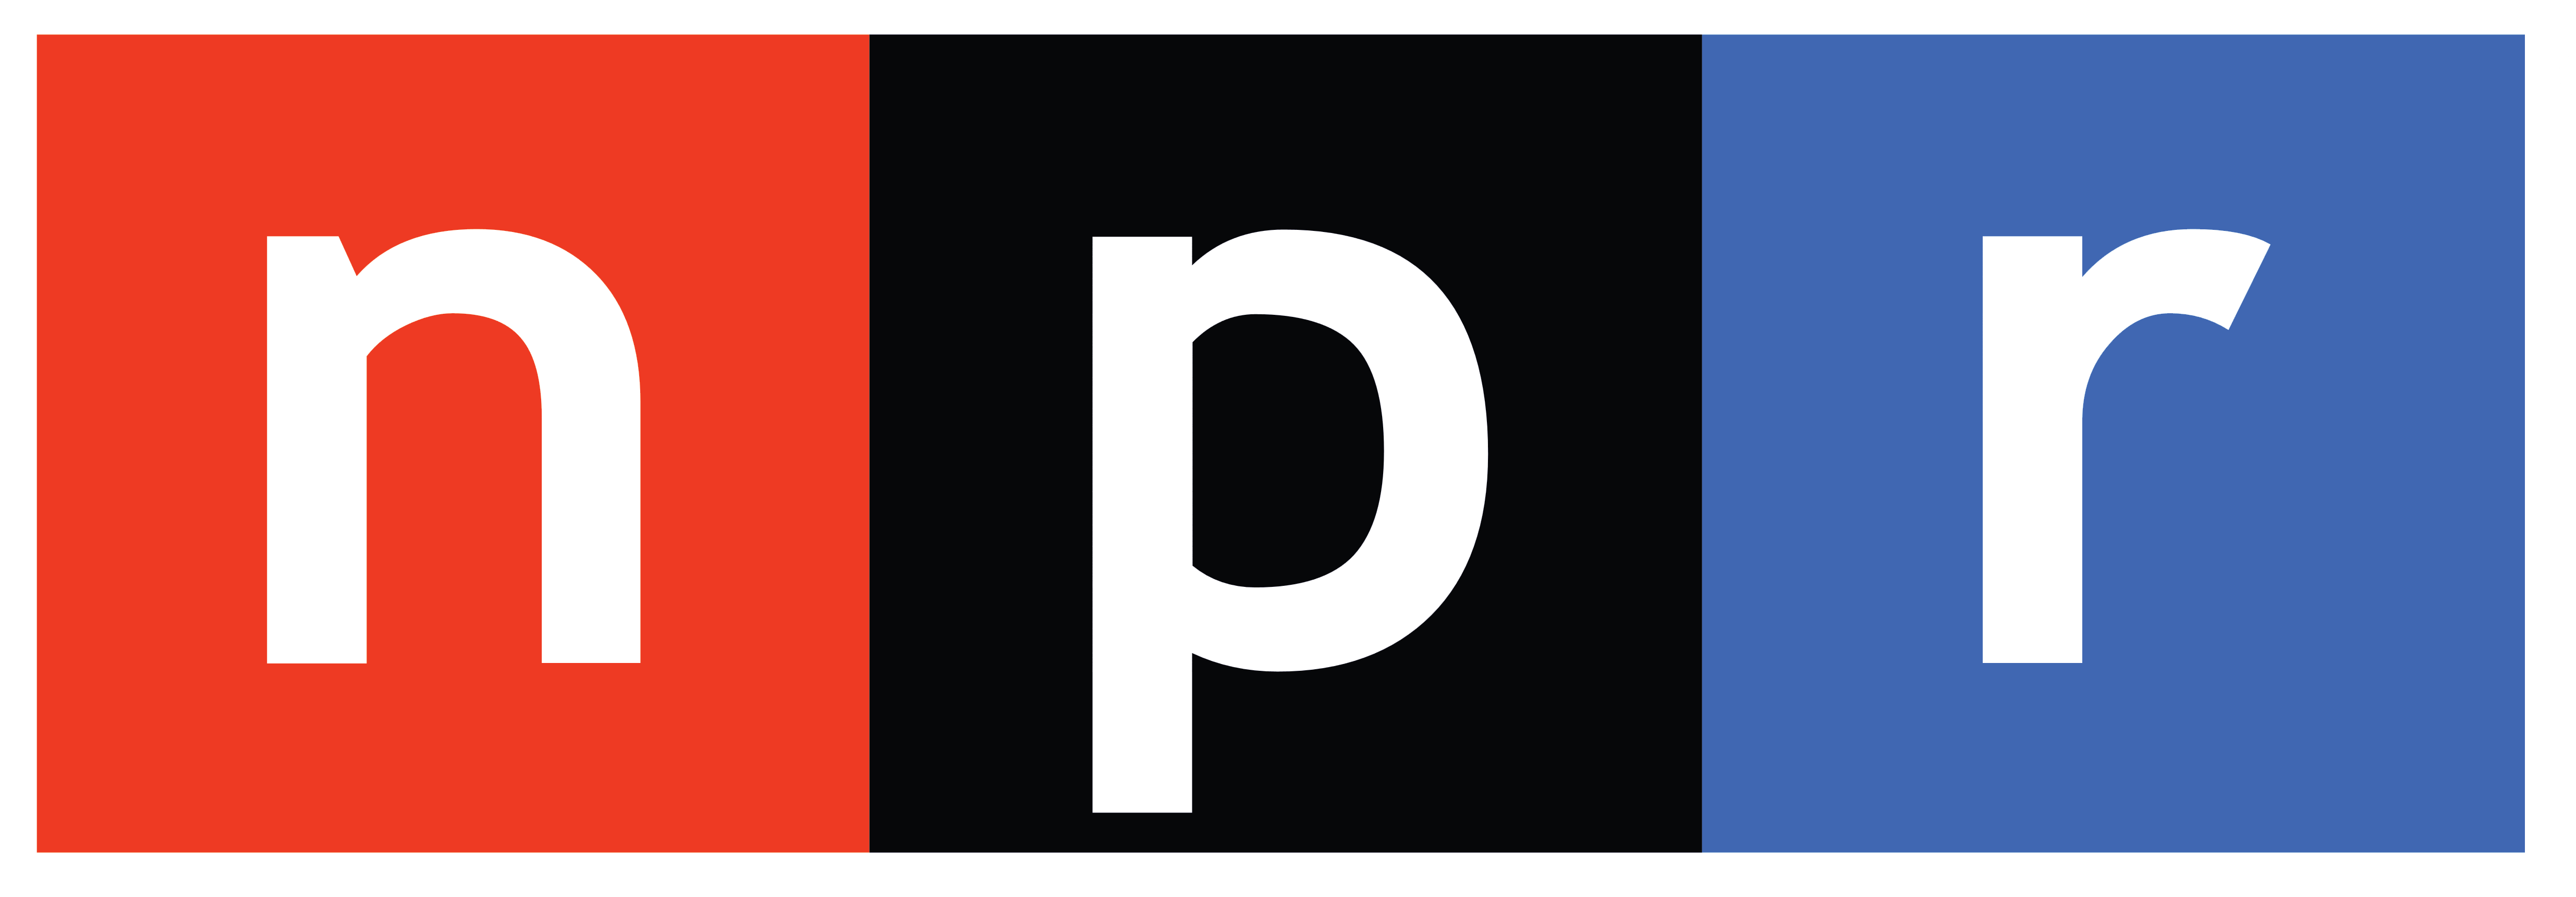 NPR logo, logotype